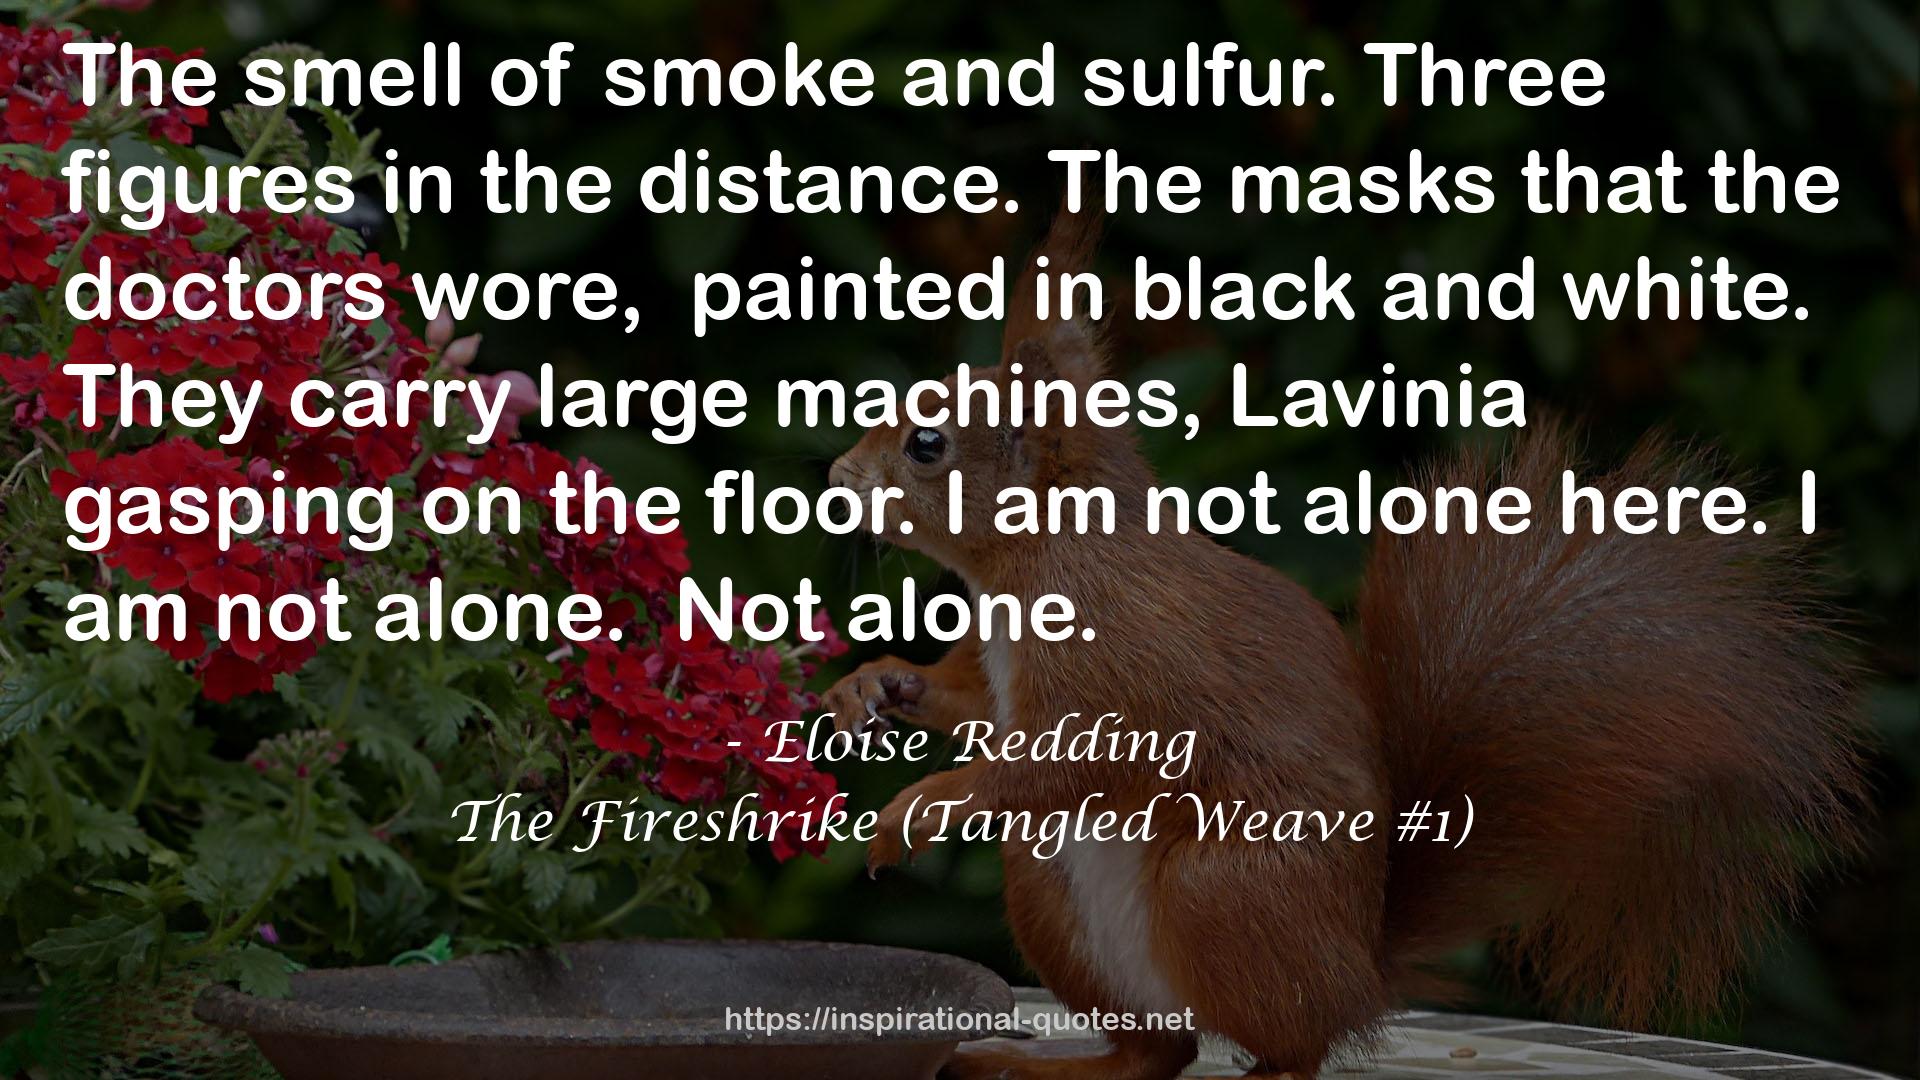 The Fireshrike (Tangled Weave #1) QUOTES